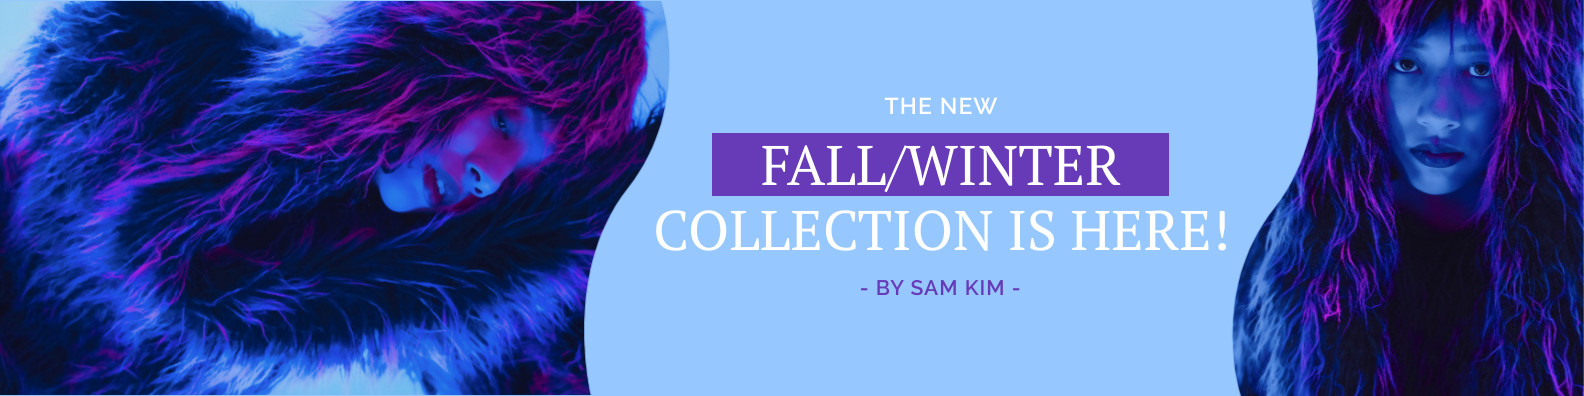 Fall Winter Fashion Collection Linkedin Profile BG